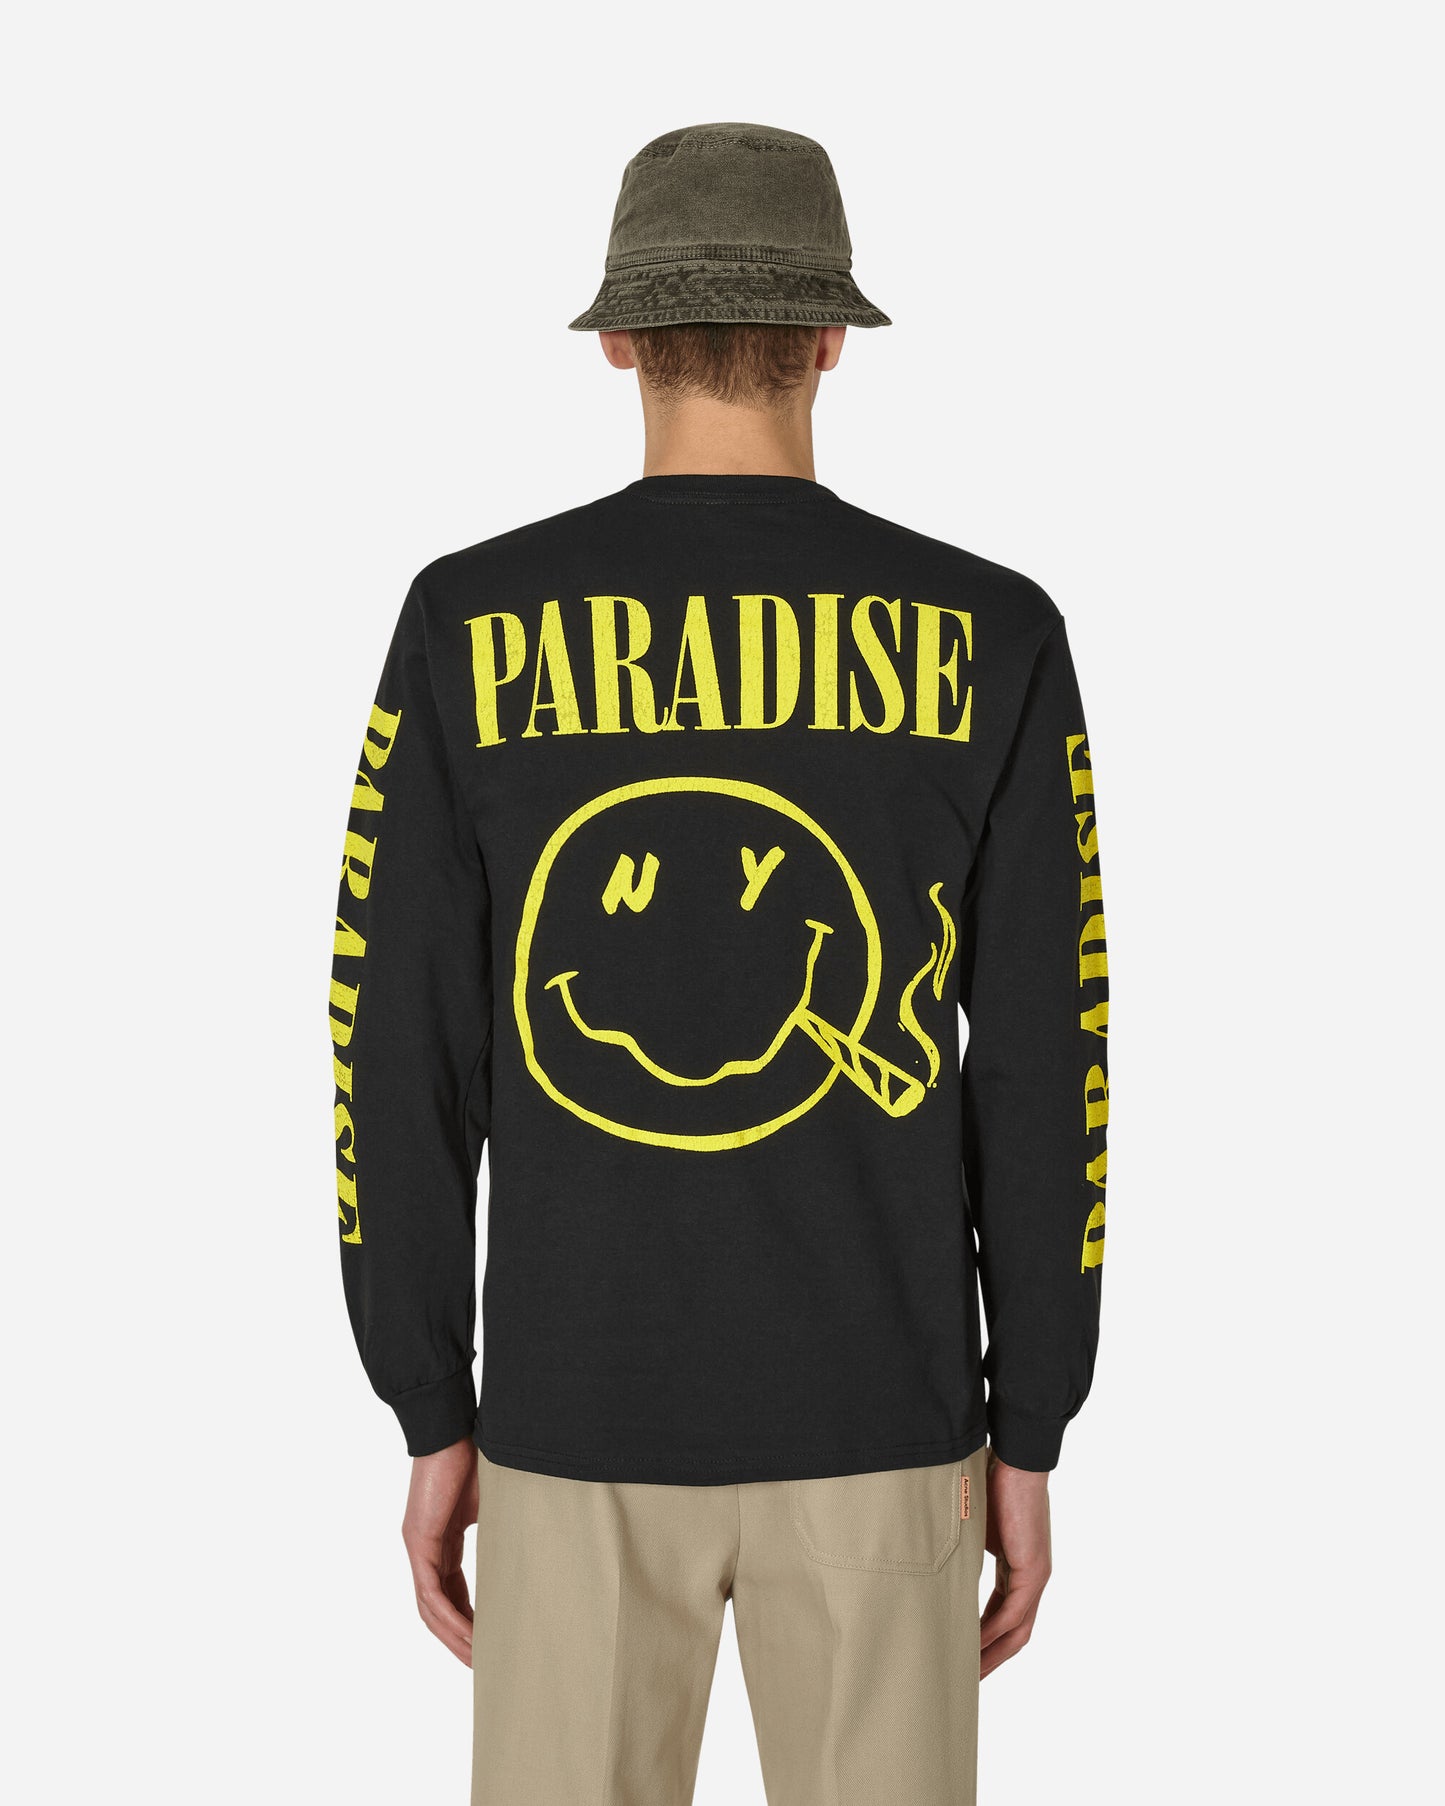 Paradis3 Nirvana In Paradis3 Longsleeve Black T-Shirts Longsleeve PANIRVANALS 002